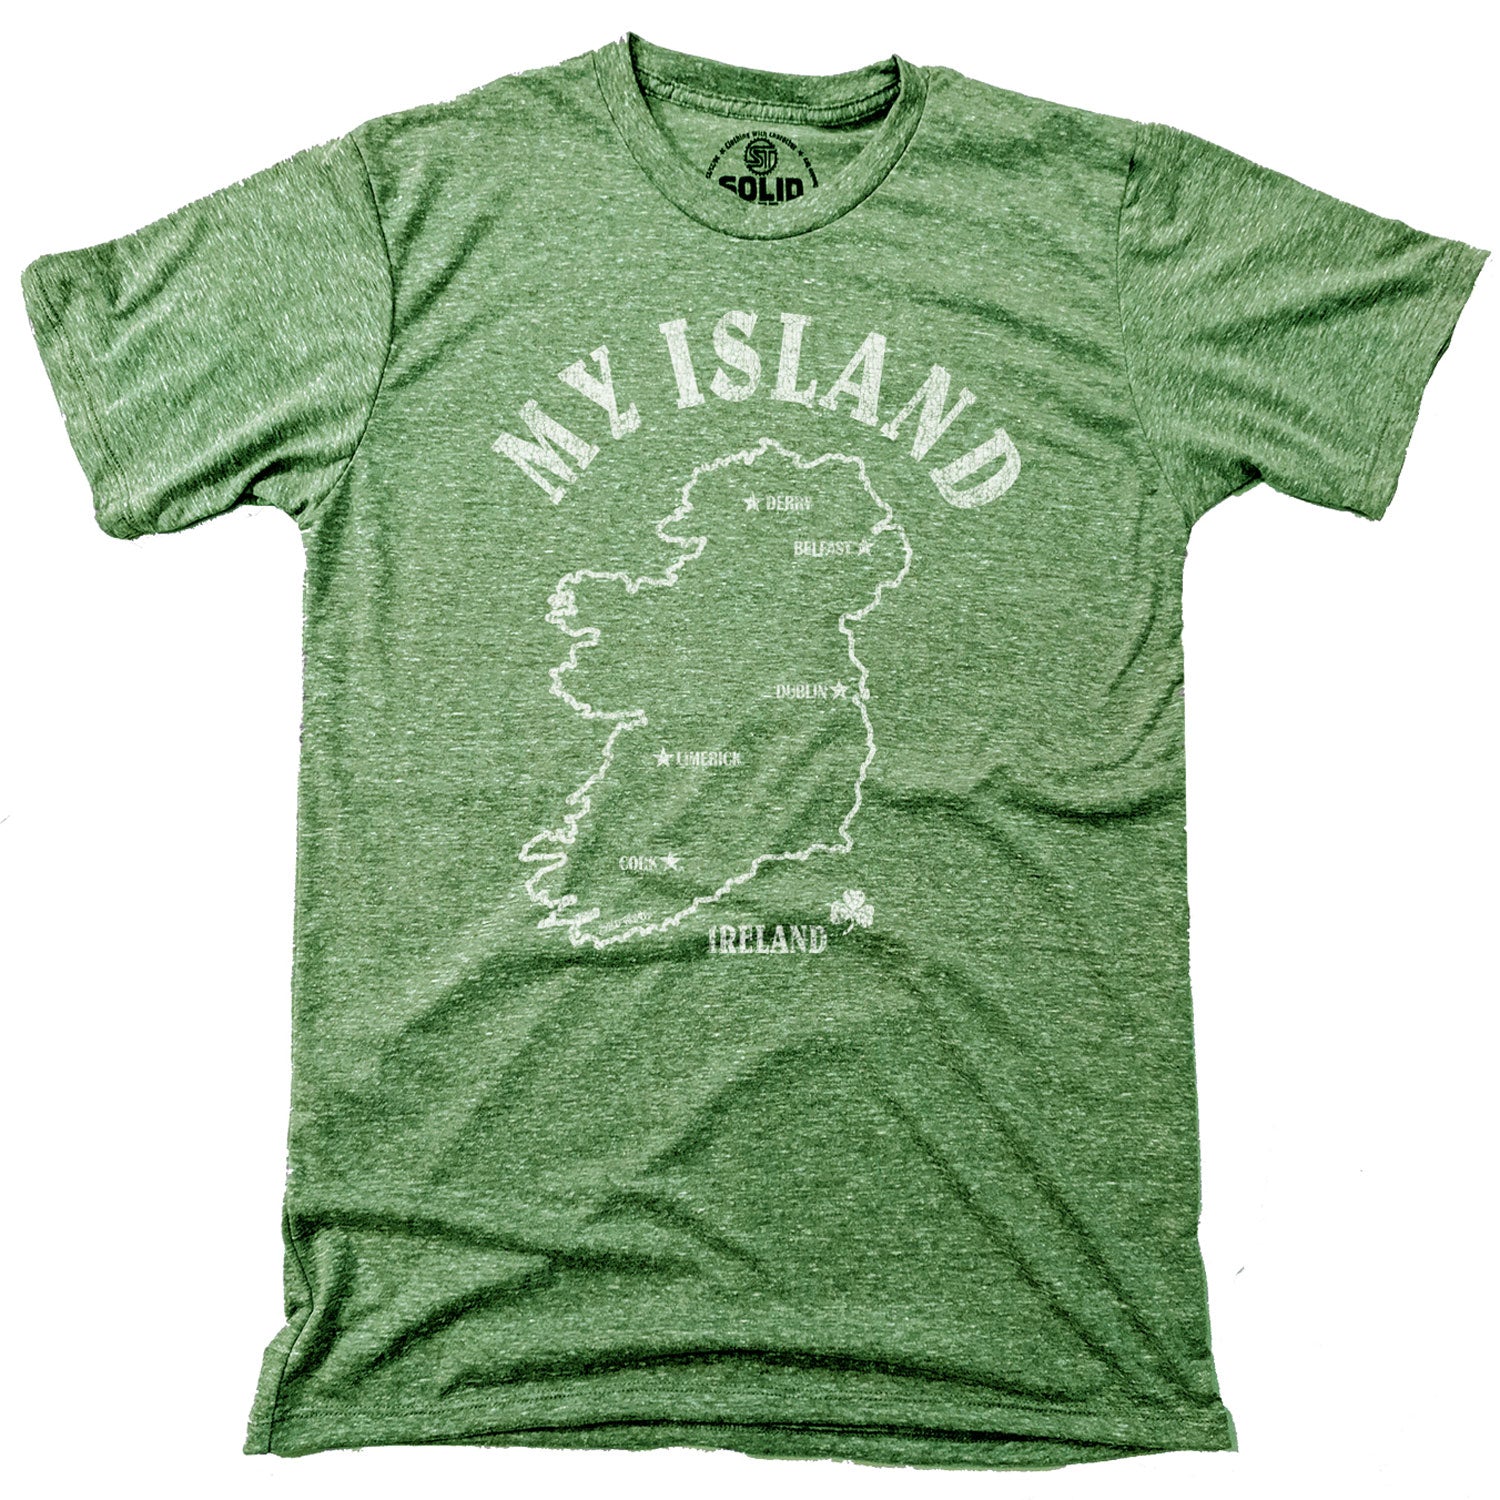 My Island T-shirt